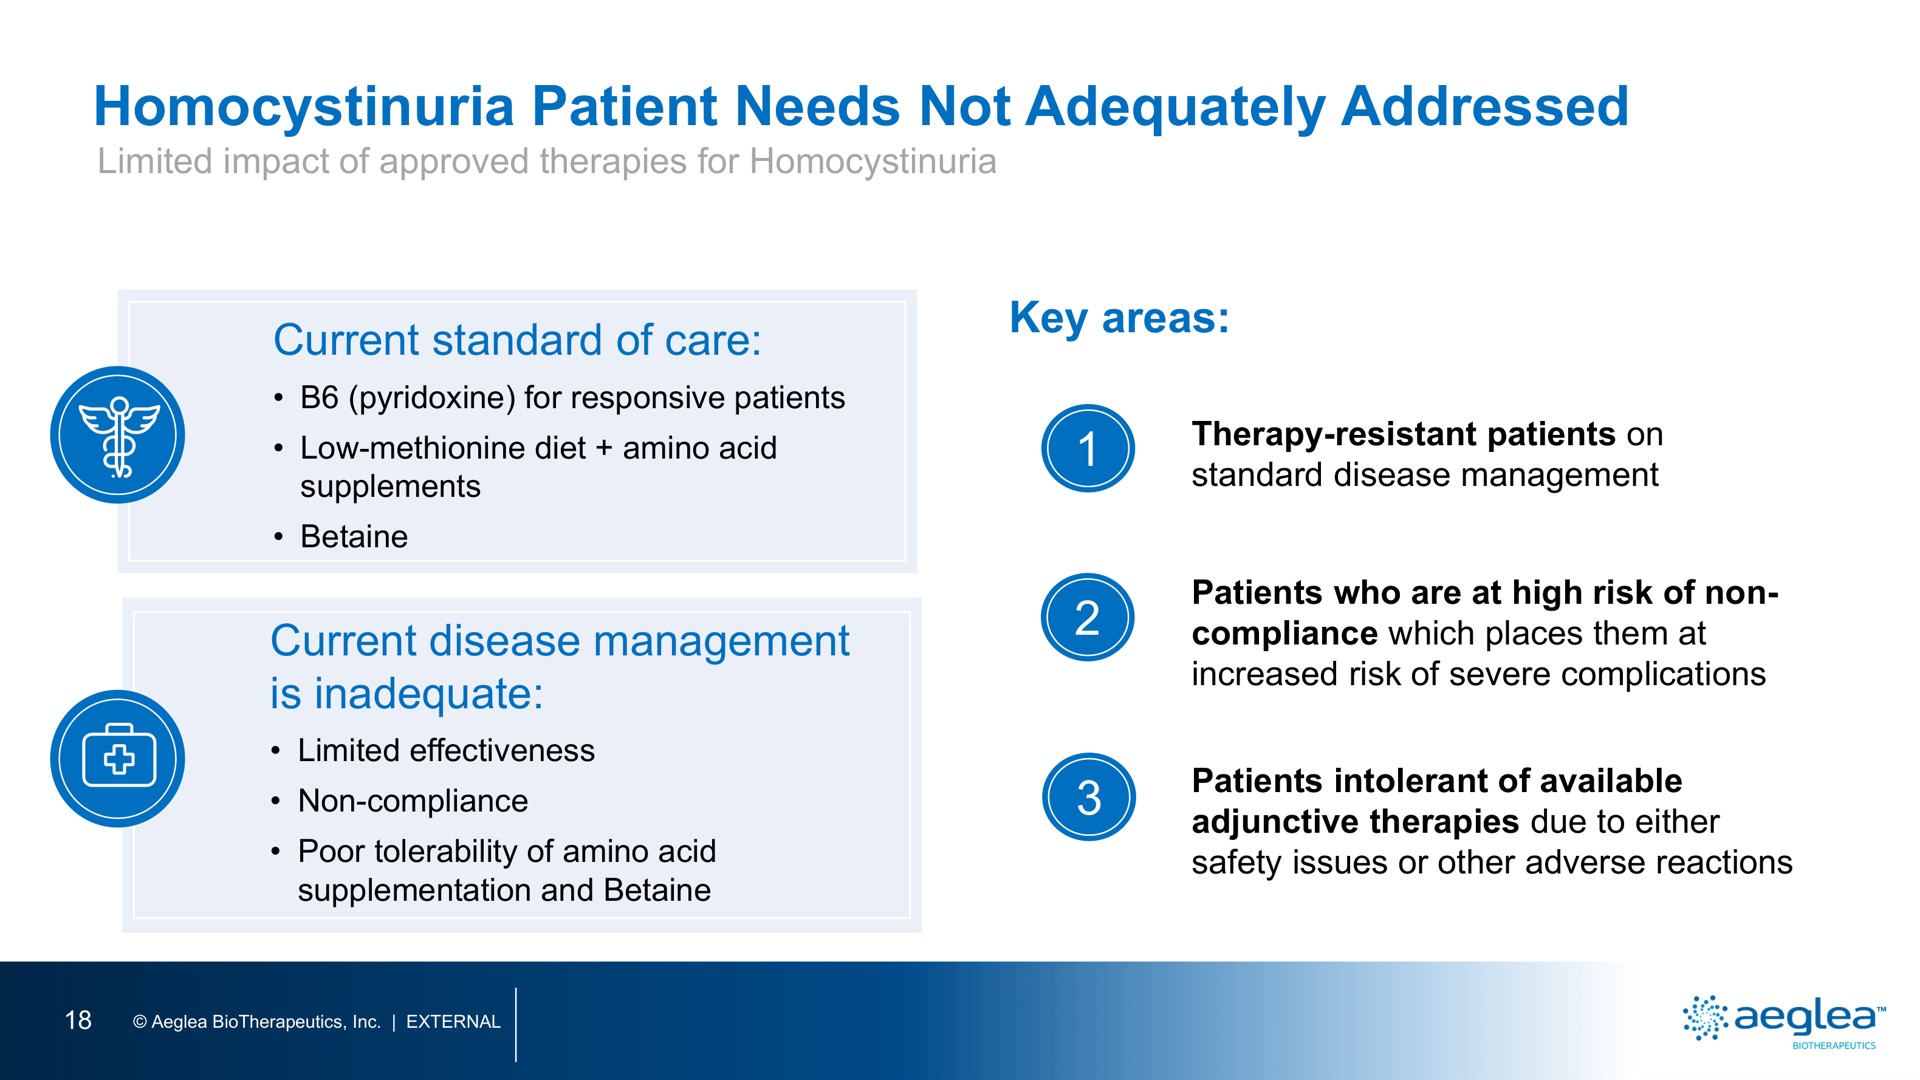 patient needs not adequately addressed | Aeglea BioTherapeutics